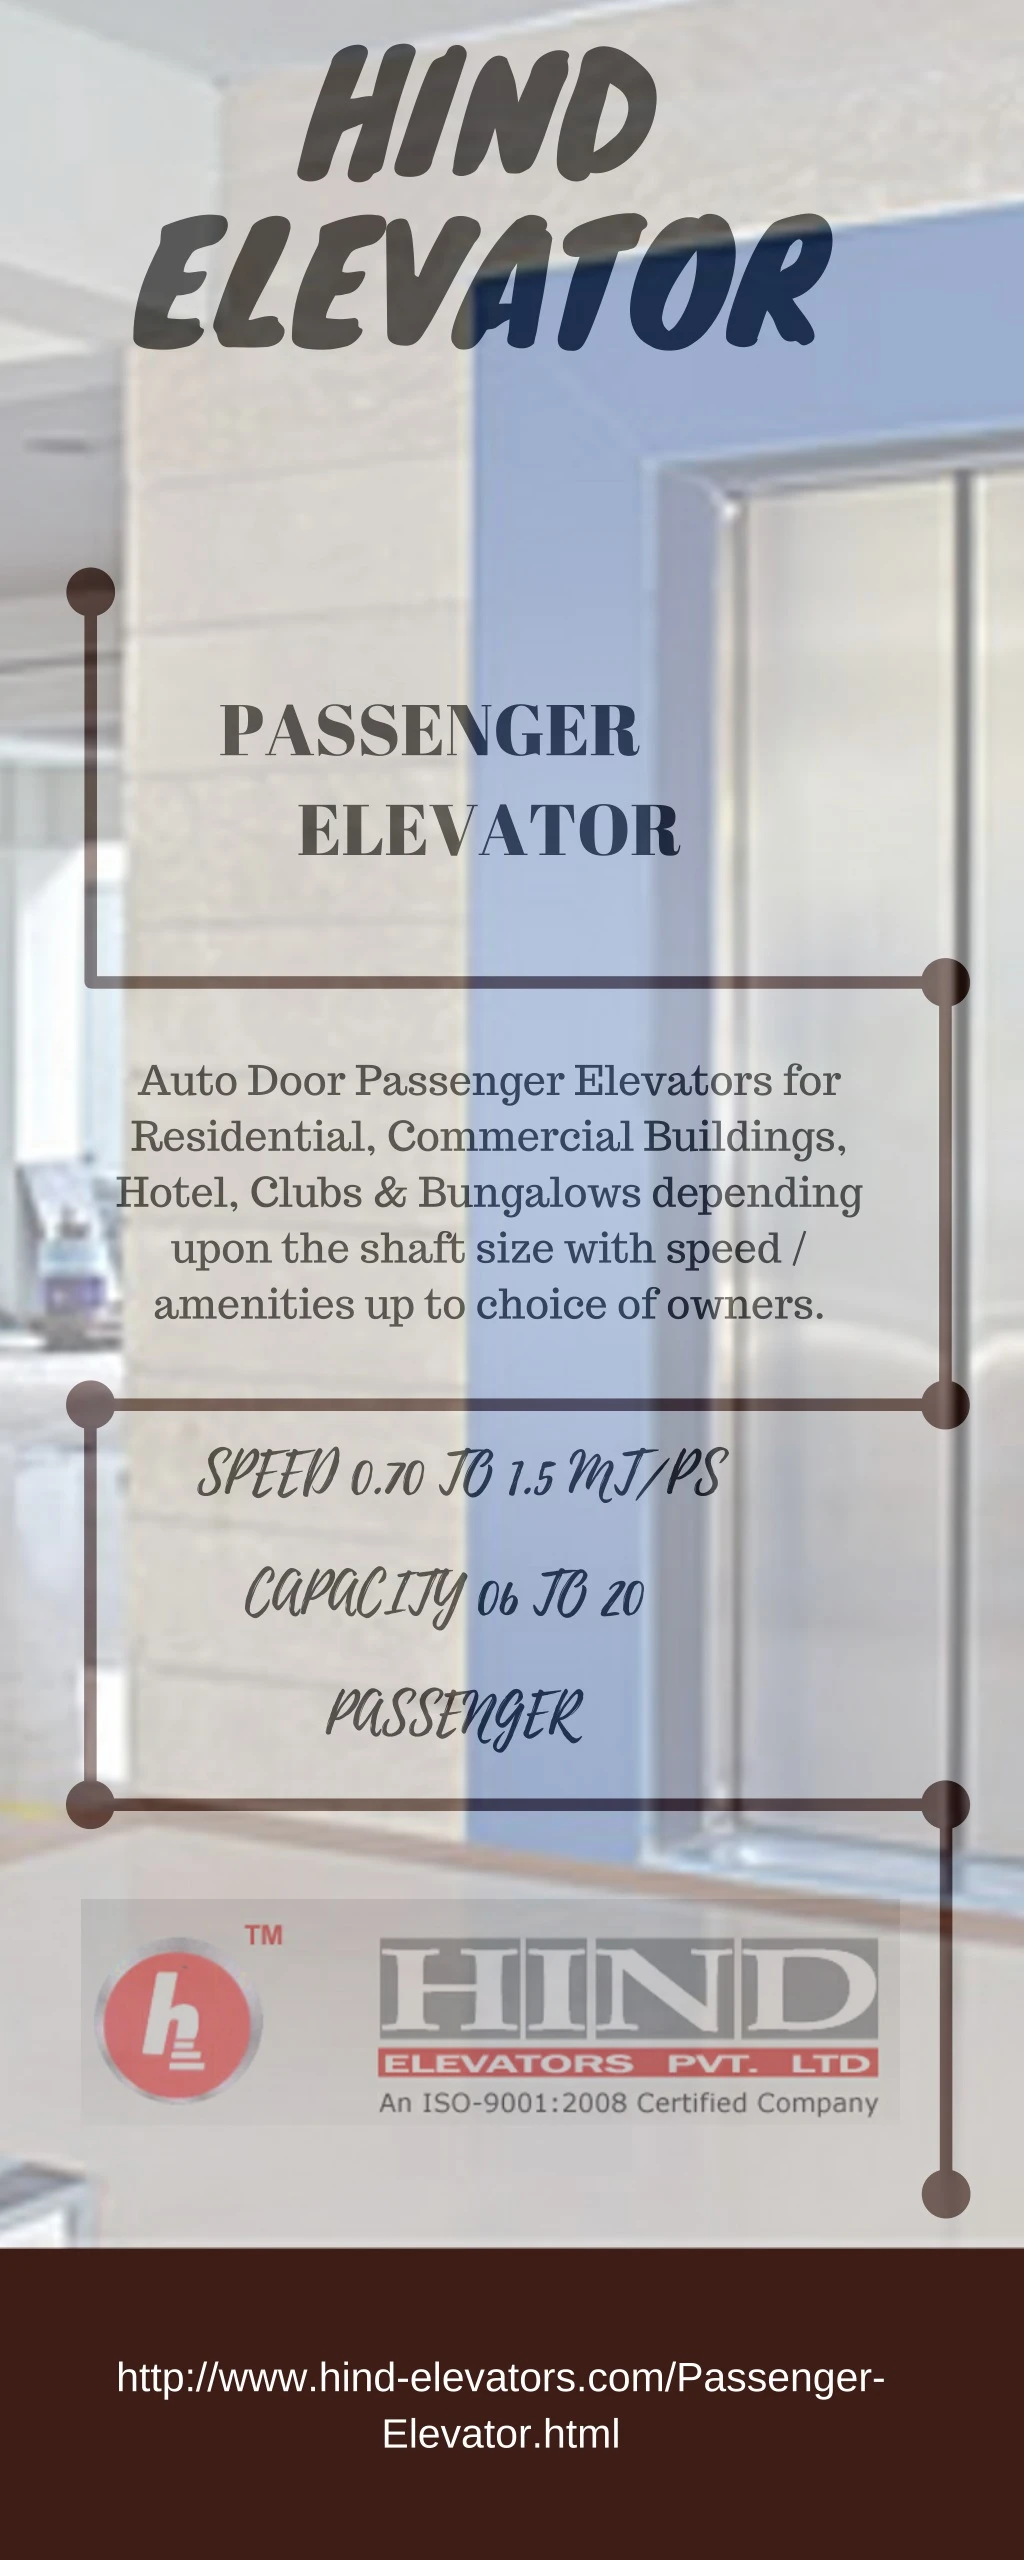 hind elevator